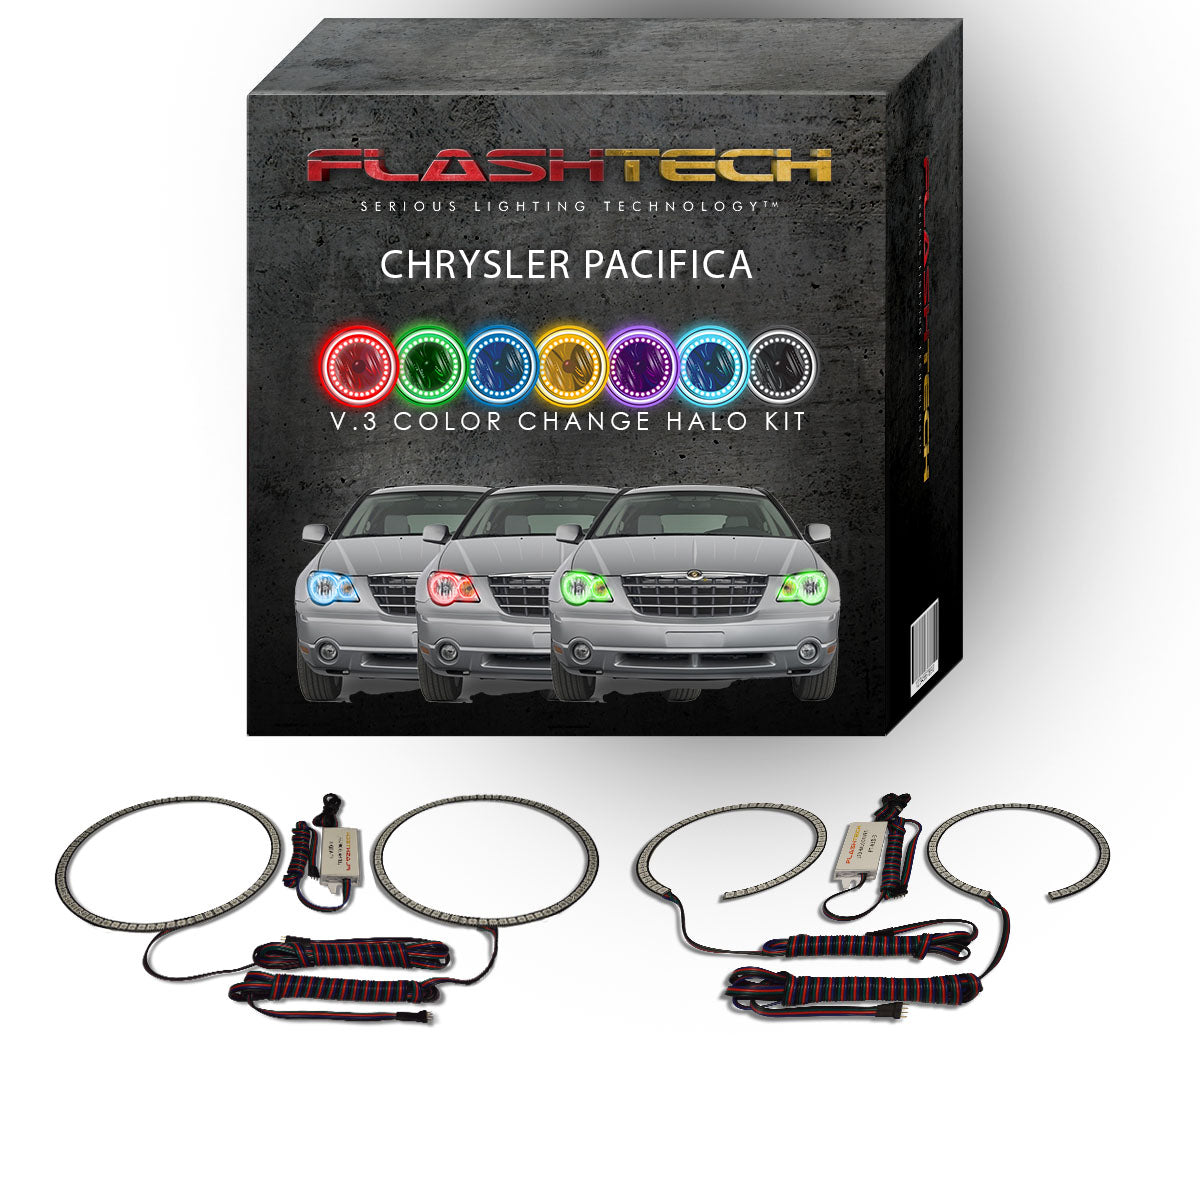 Chrysler-Pacifica-2006, 2007, 2008, 2009-LED-Halo-Headlights-RGB-No Remote-CH-PF0609-V3H